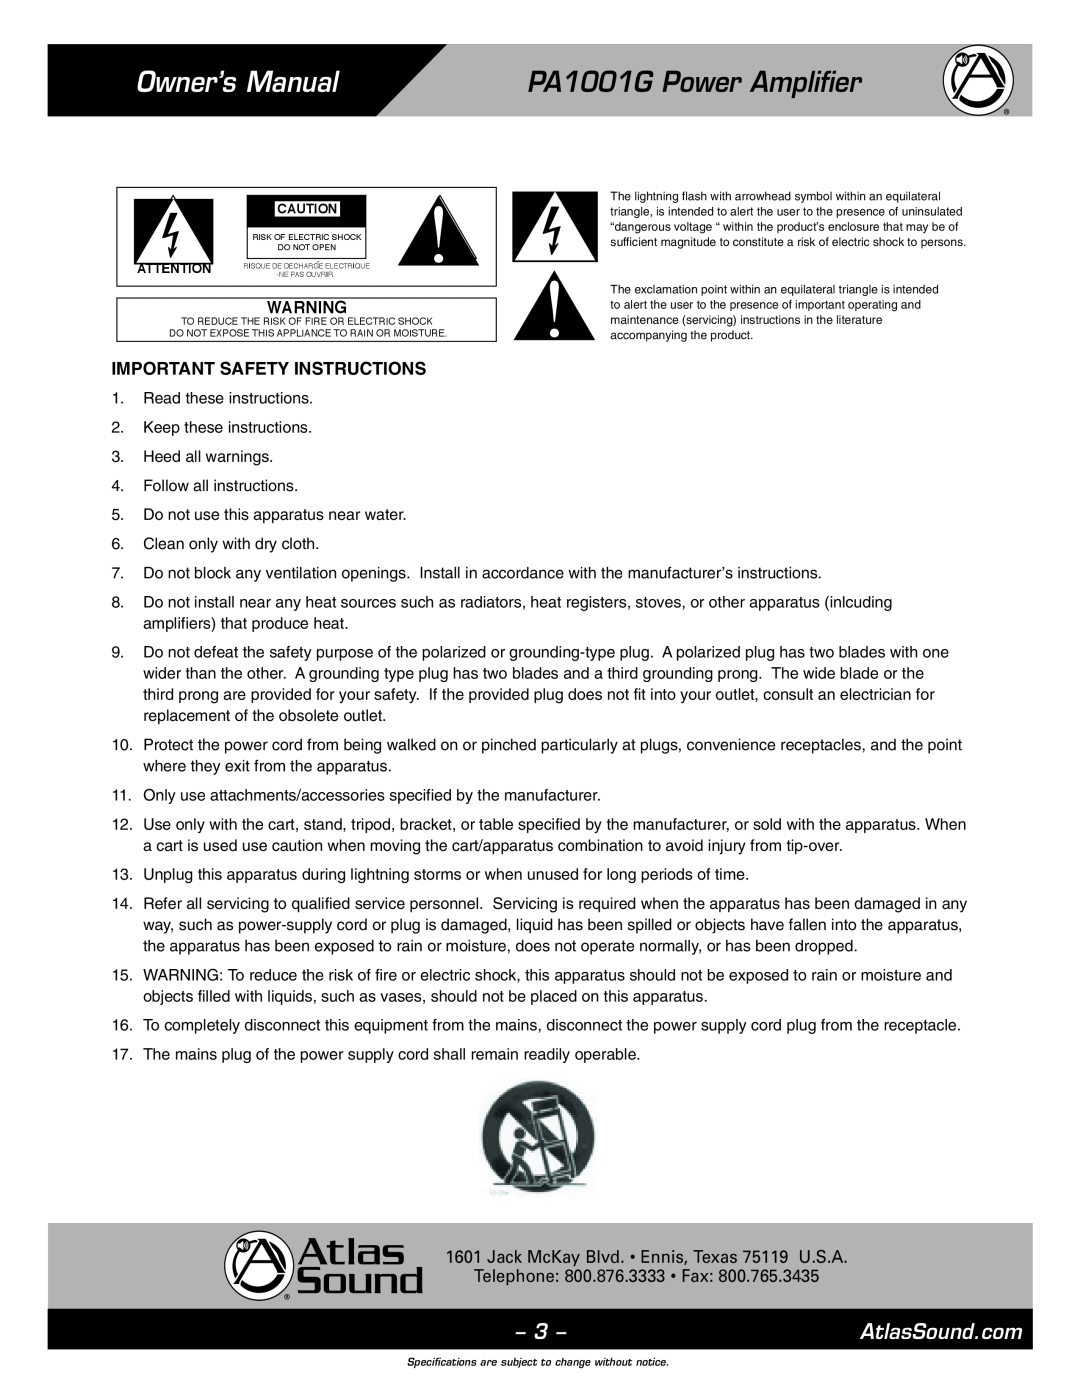 Atlas Sound Important Safety Instructions, PA1001G Power Amplifier, Jack McKay Blvd. Ennis, Texas 75119 U.S.A 